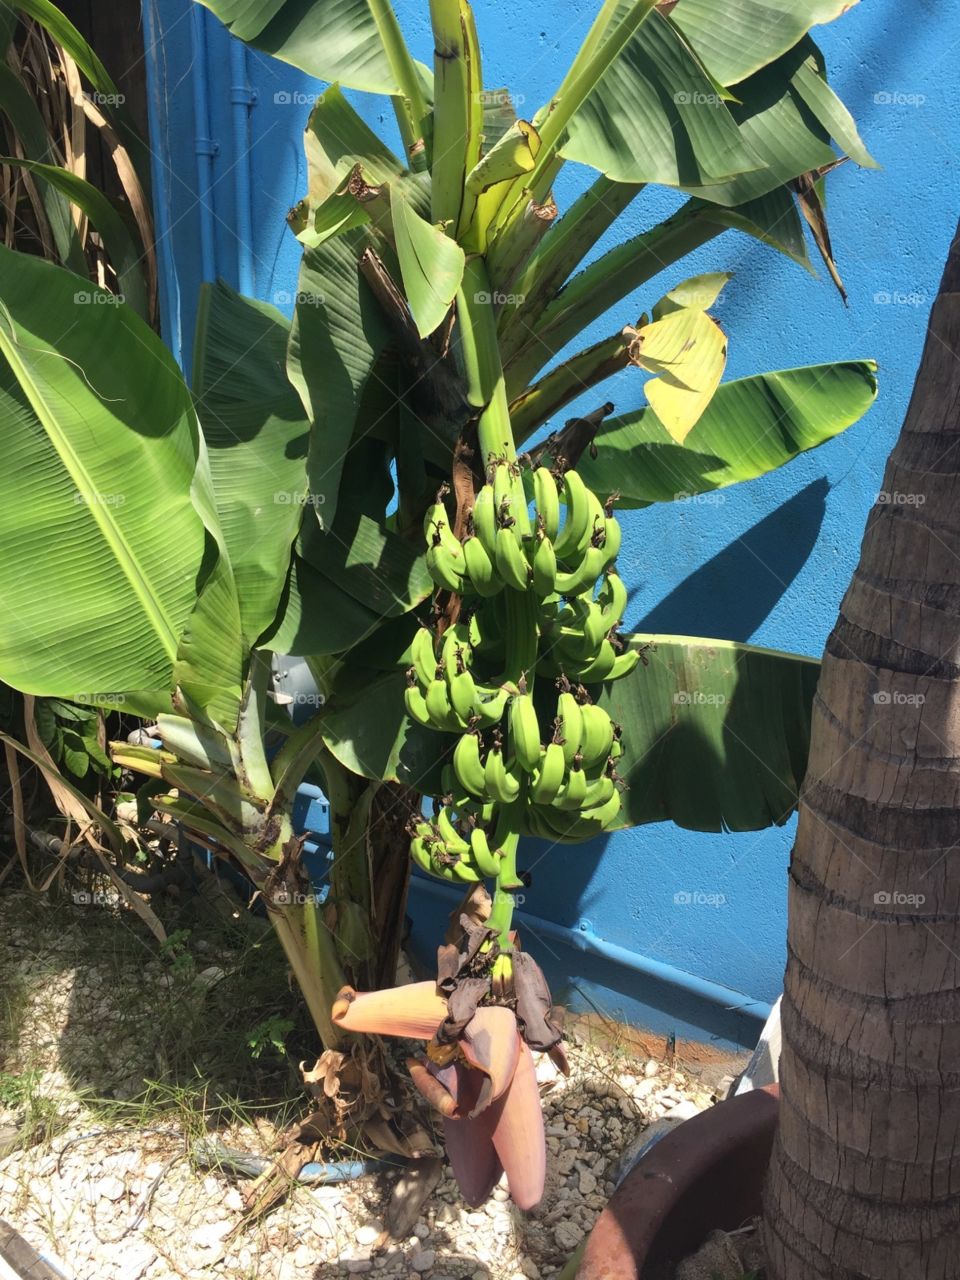 #fruit #food #plant #bananas #tropical 